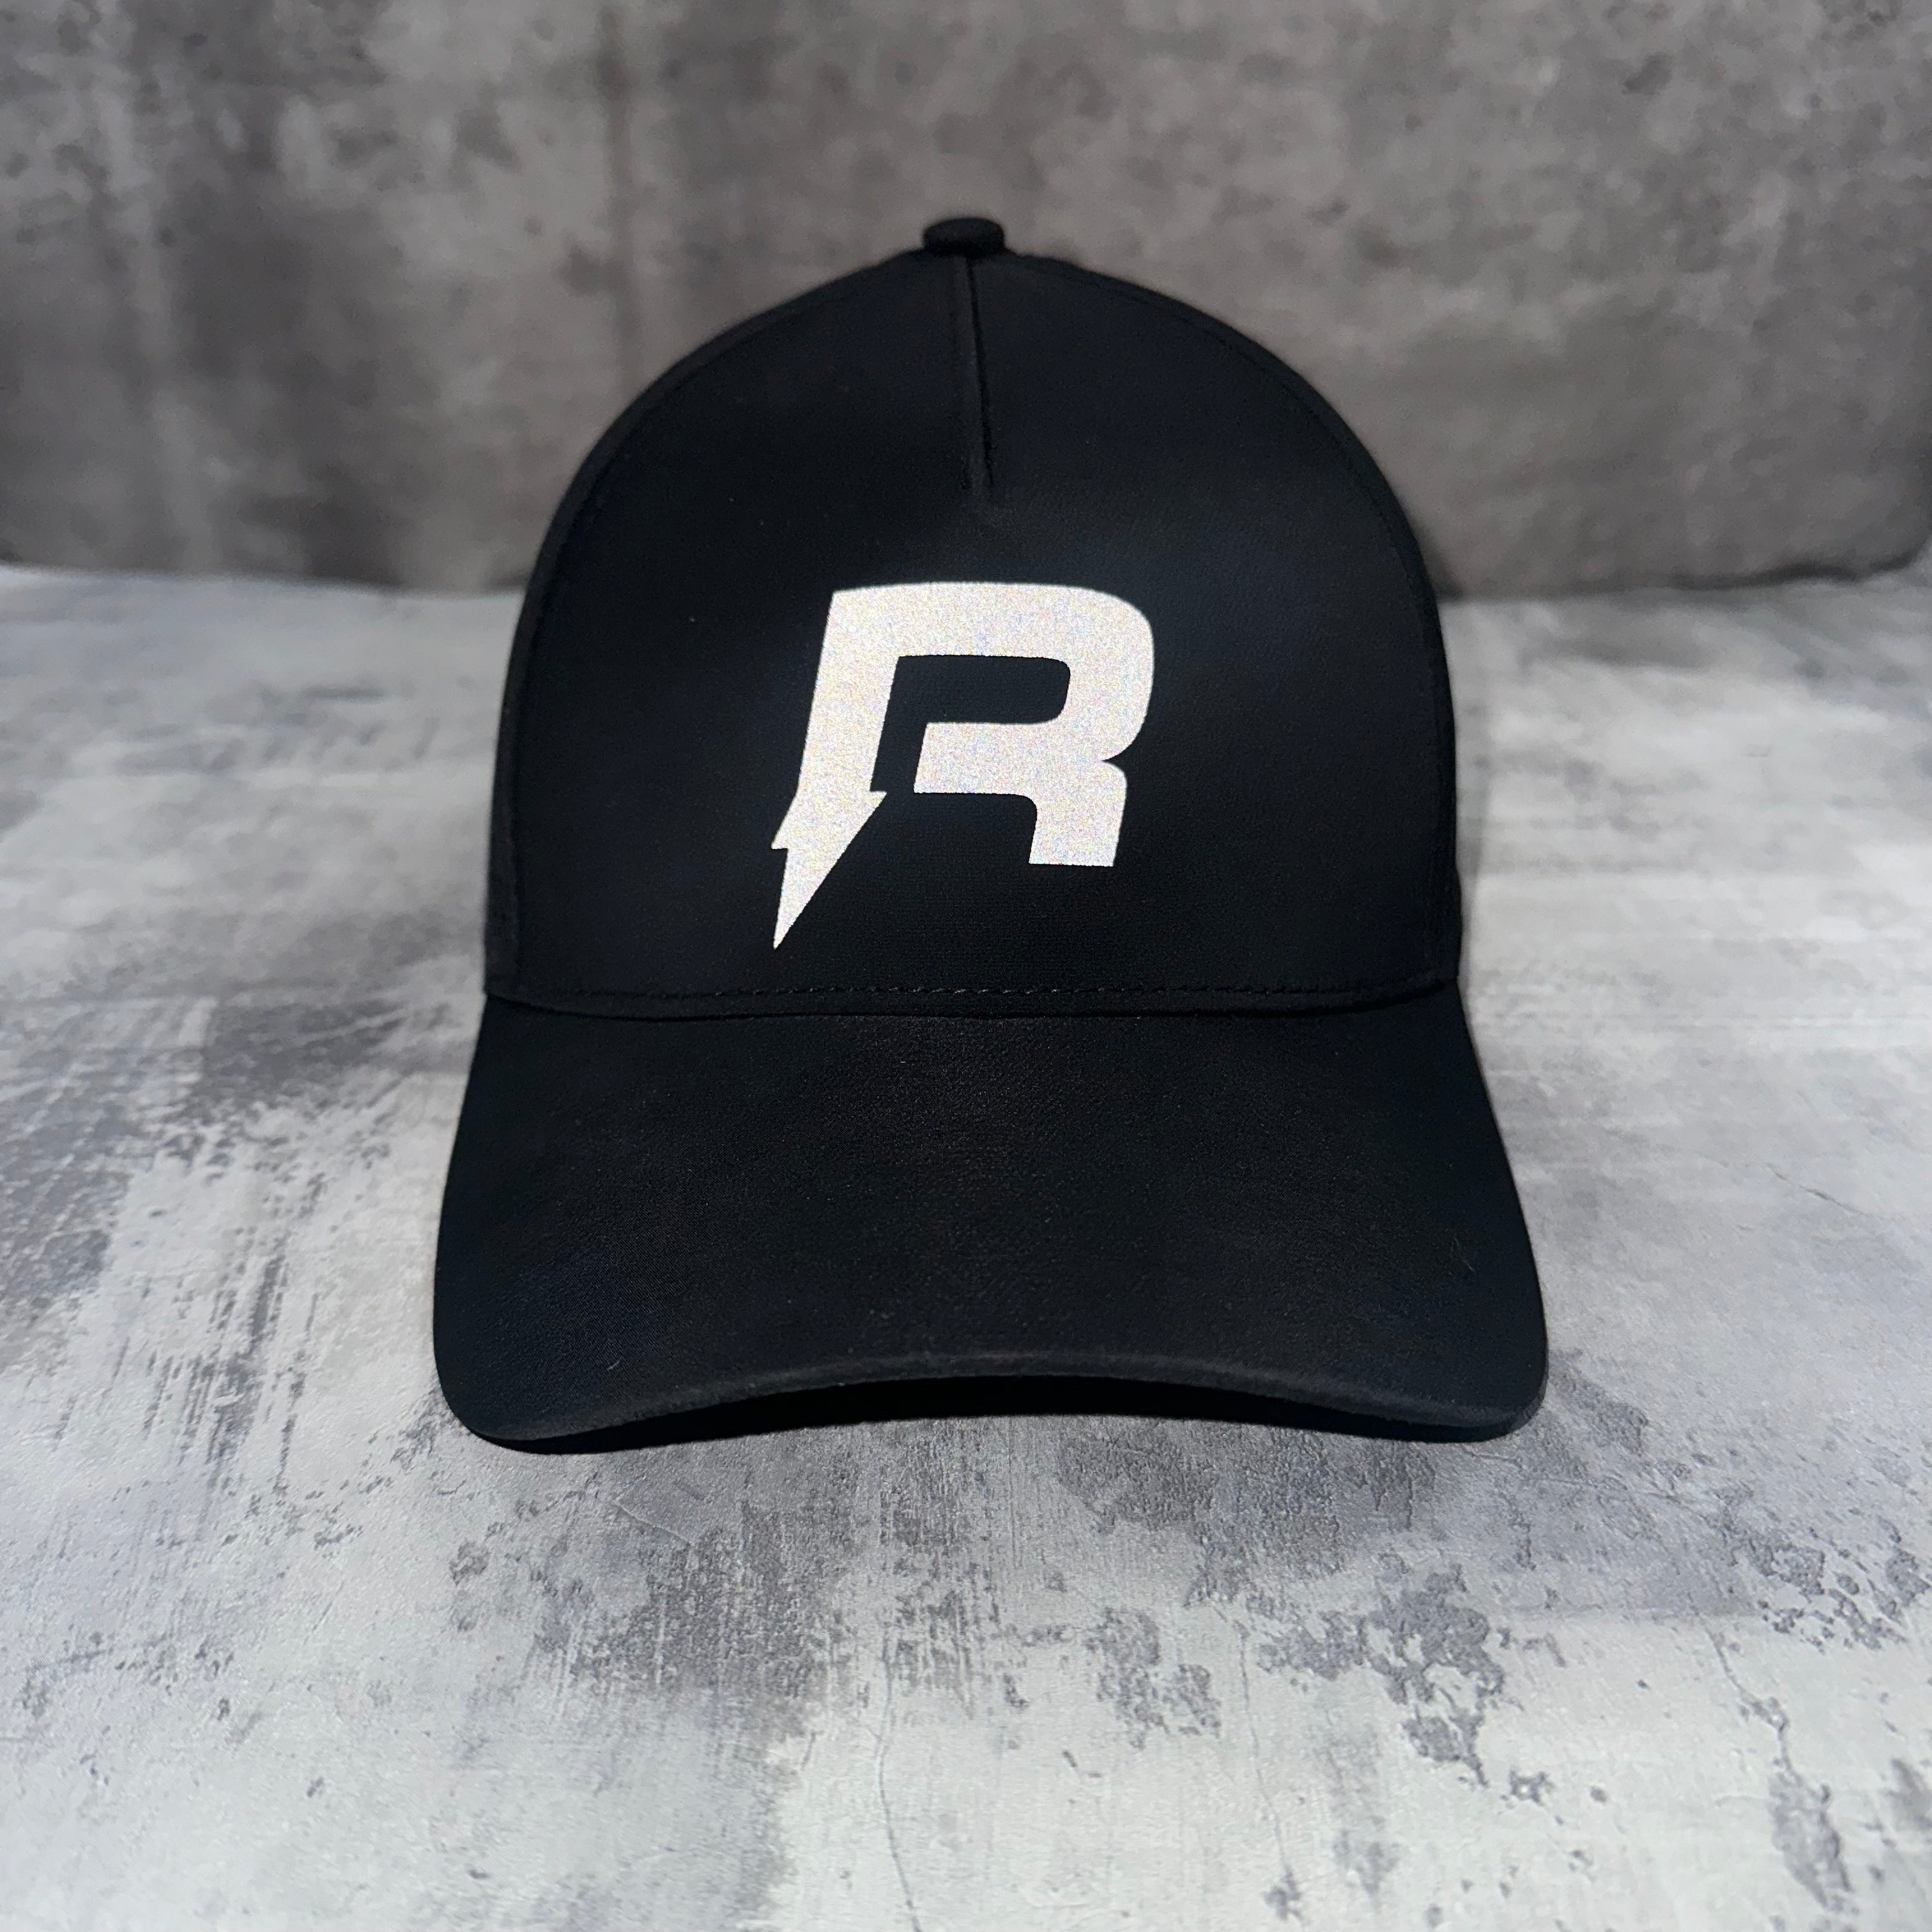 Reprimo Racer Perforated Cap Black